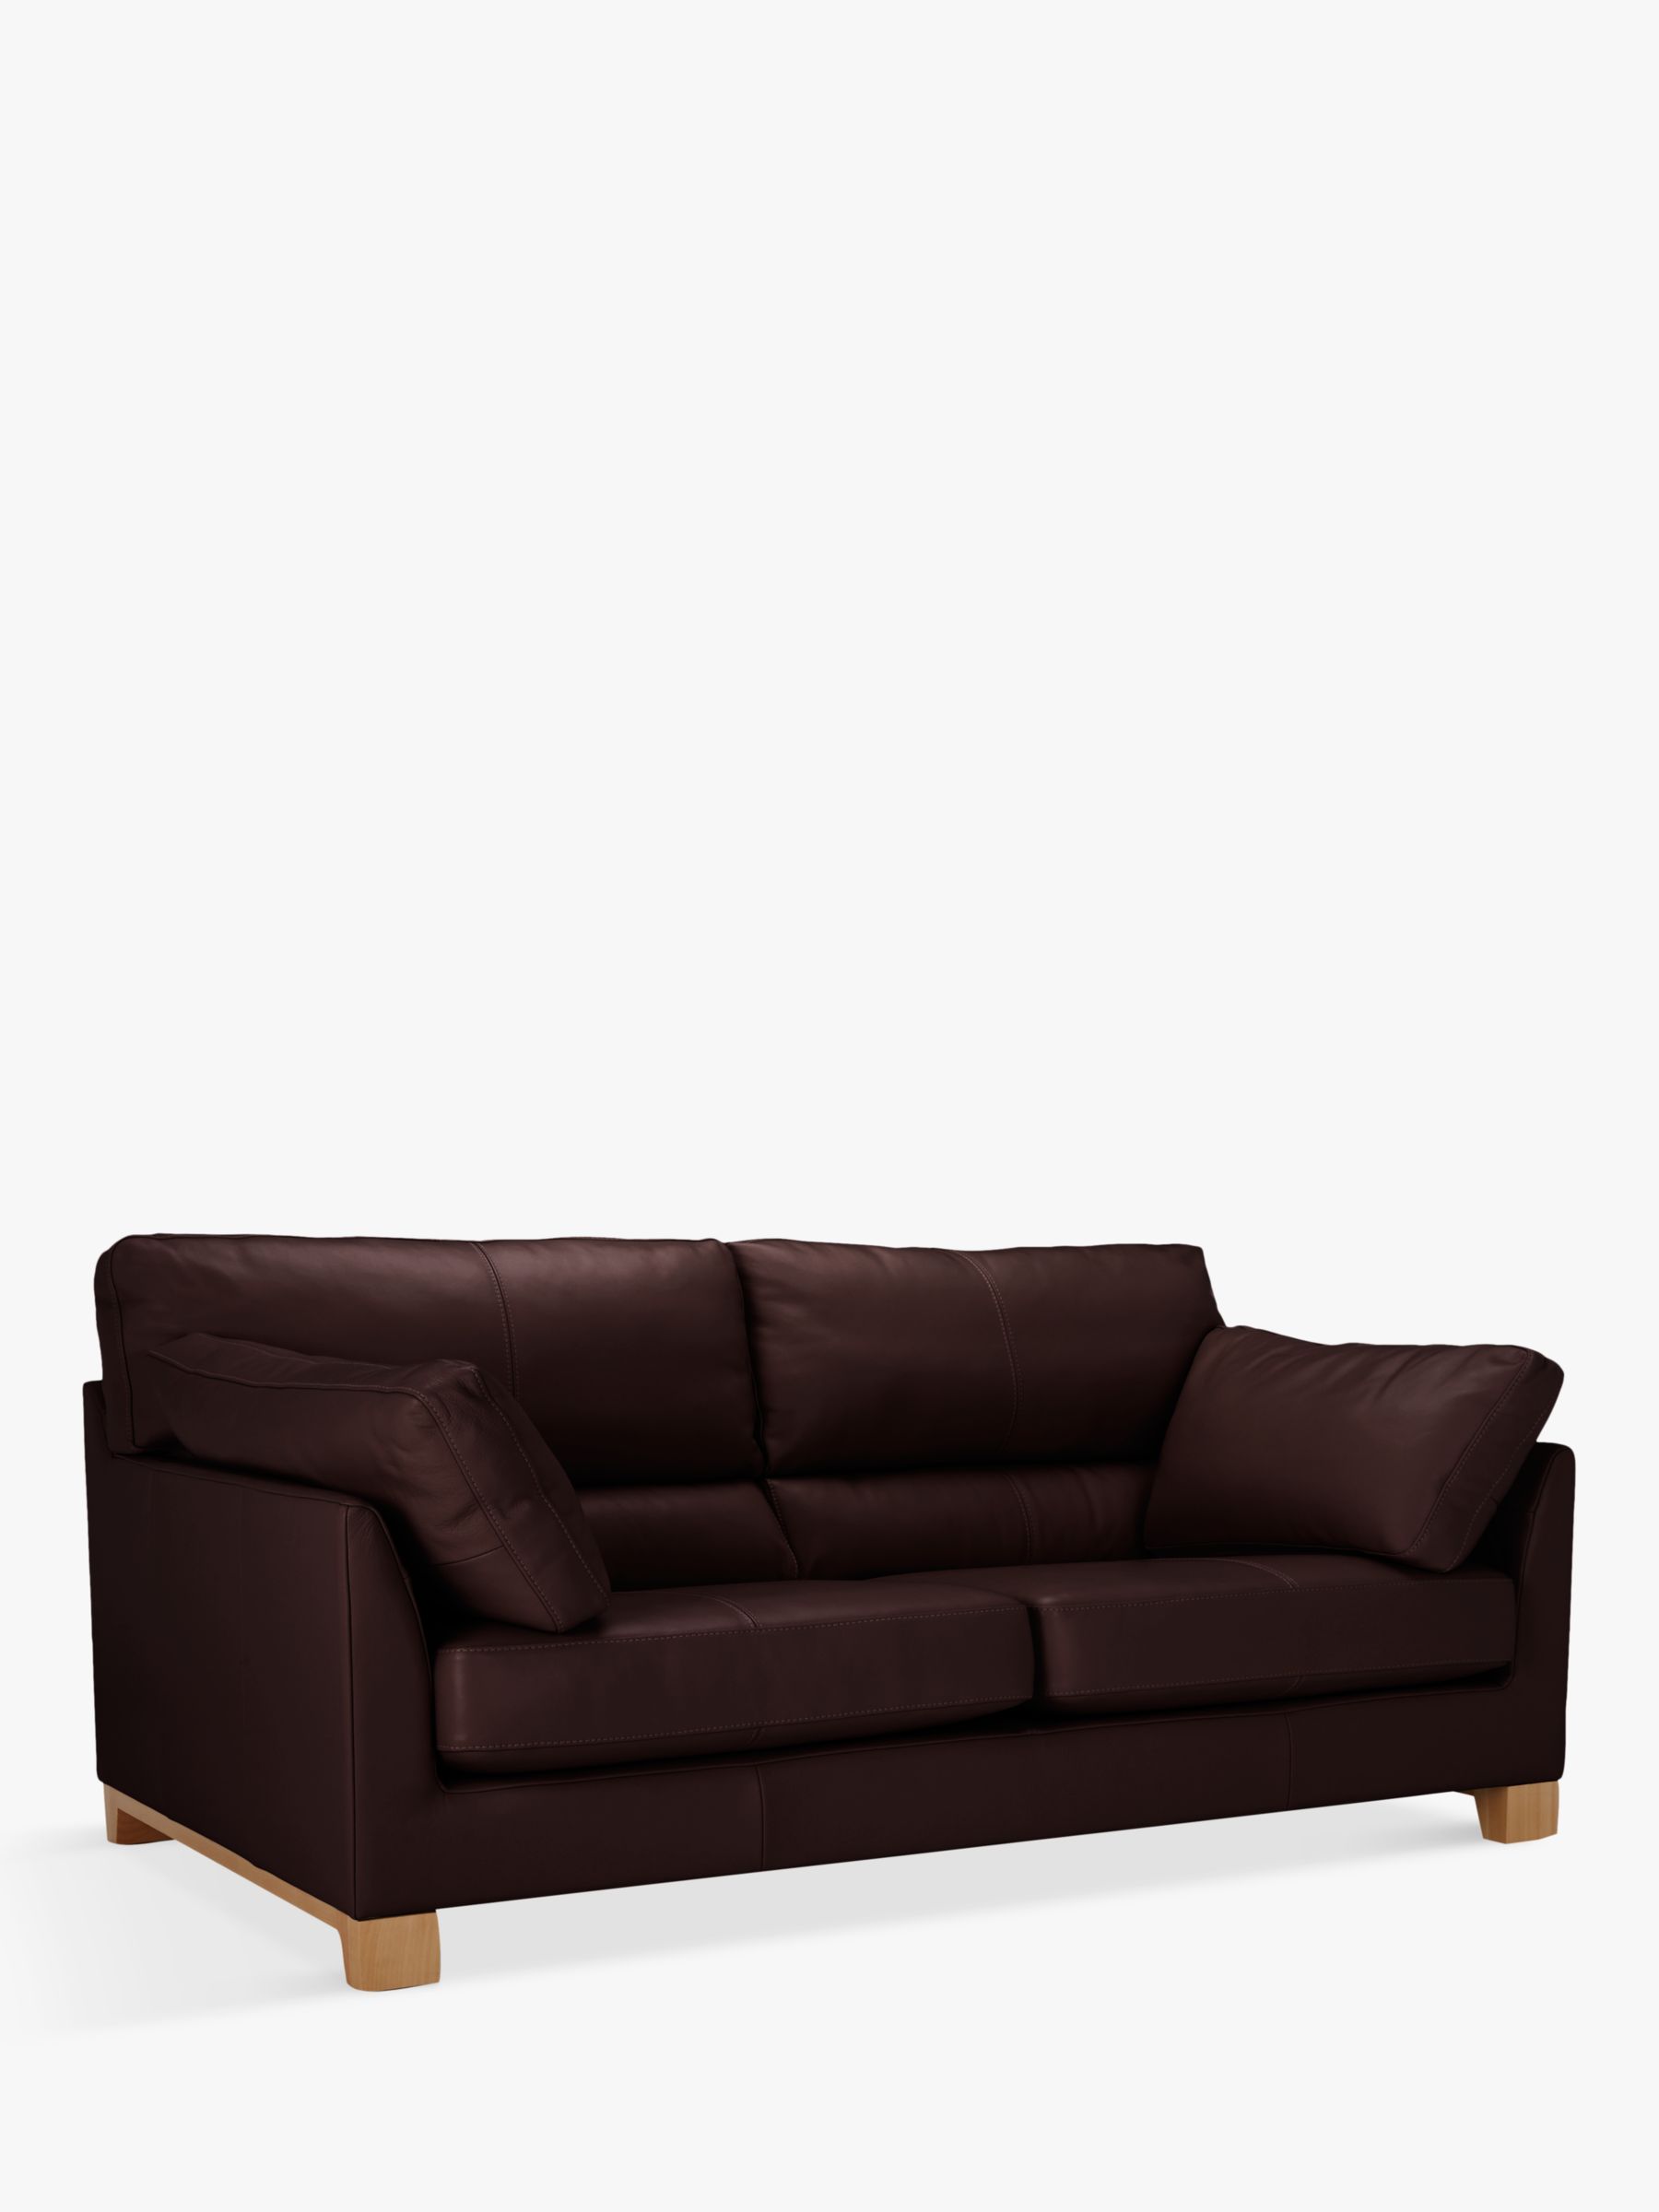 John Lewis & Partners Ikon High Back Large 3 Seater Leather Sofa